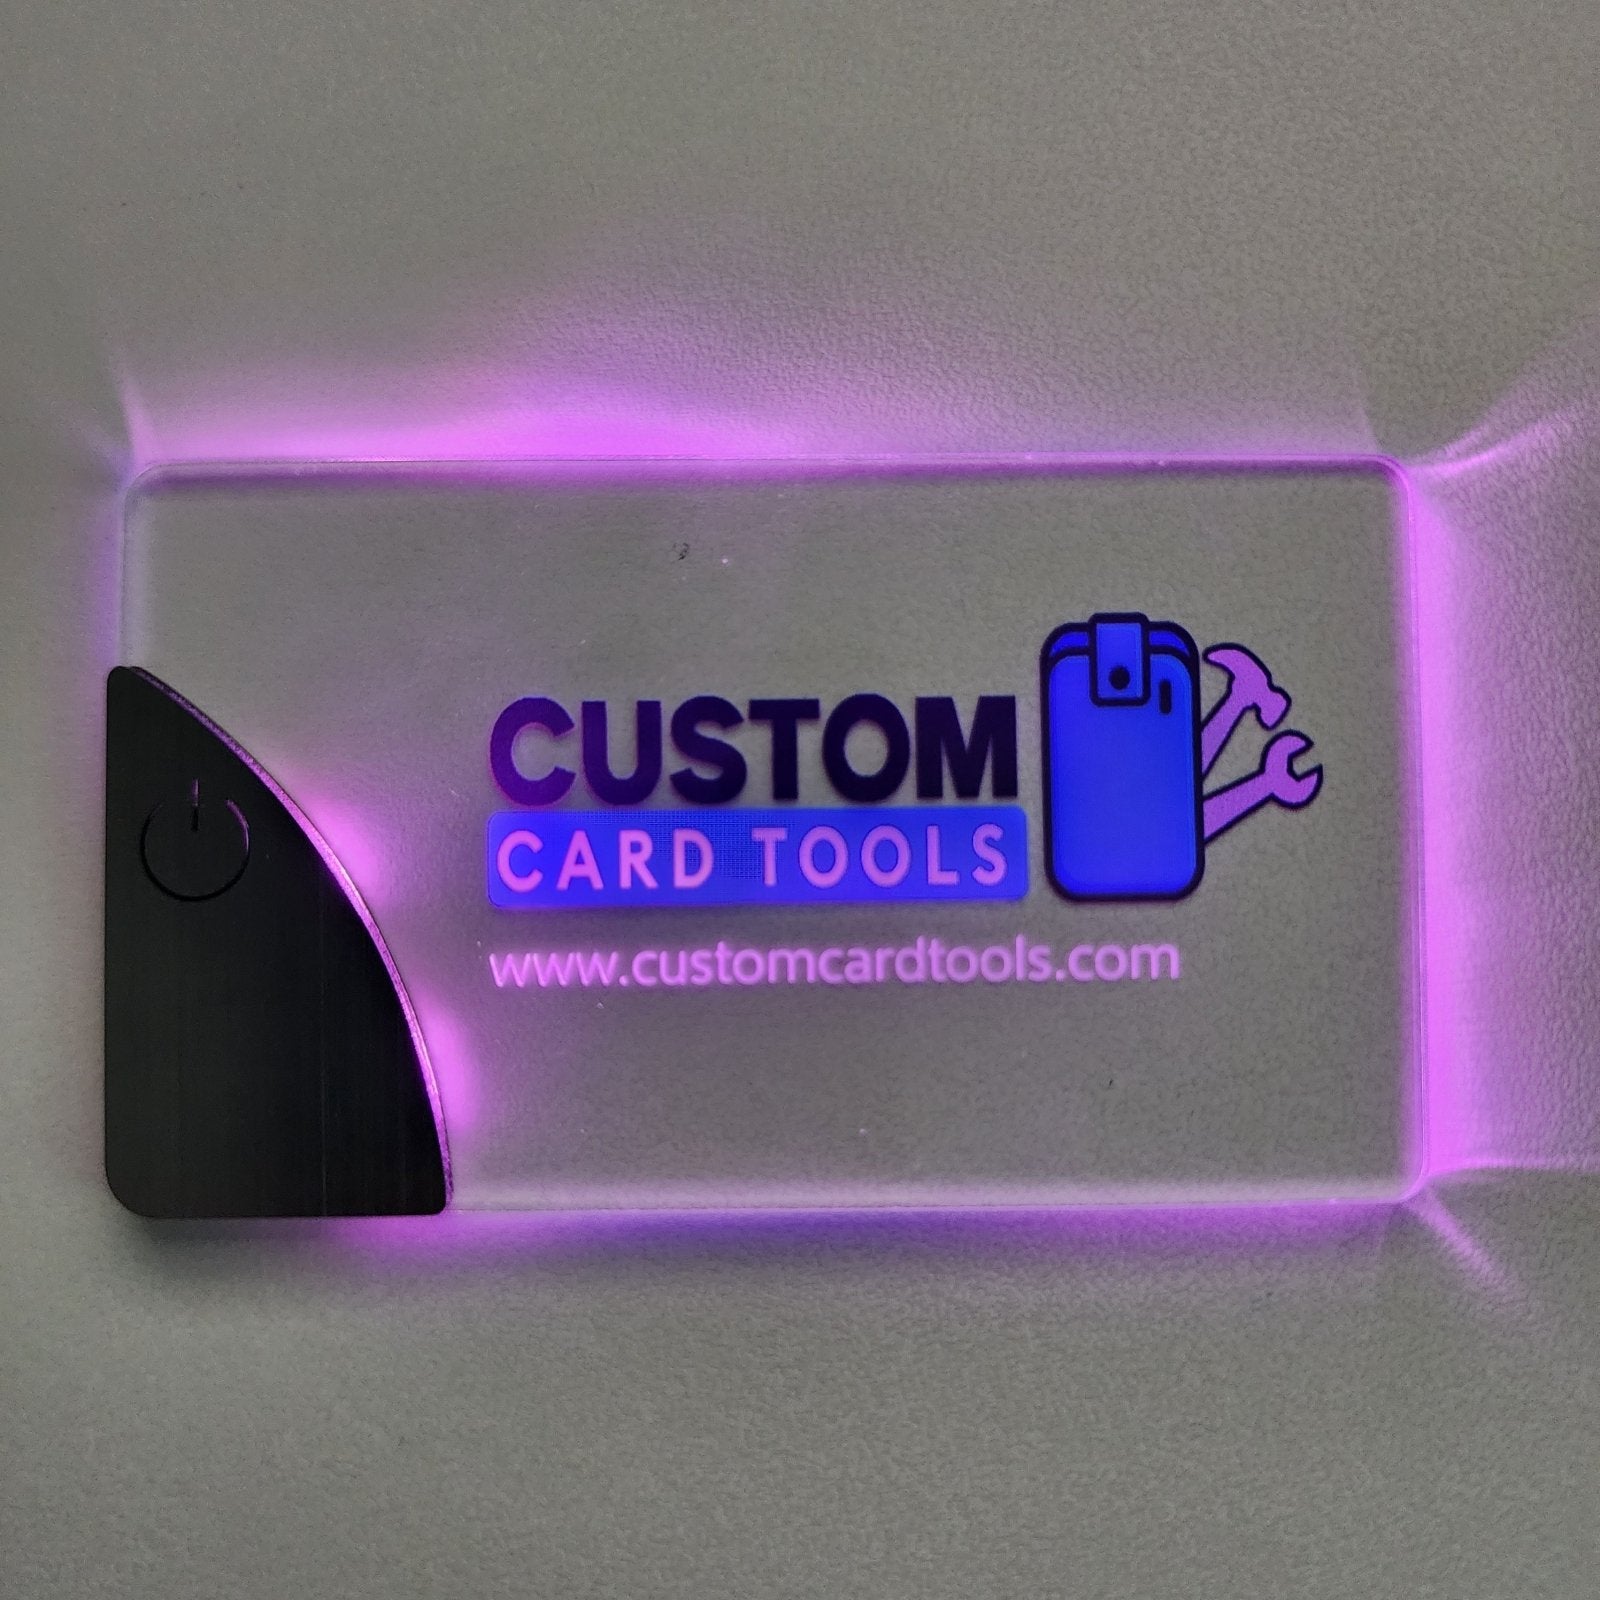 LED Custom Business Cards - Custom Card Tools